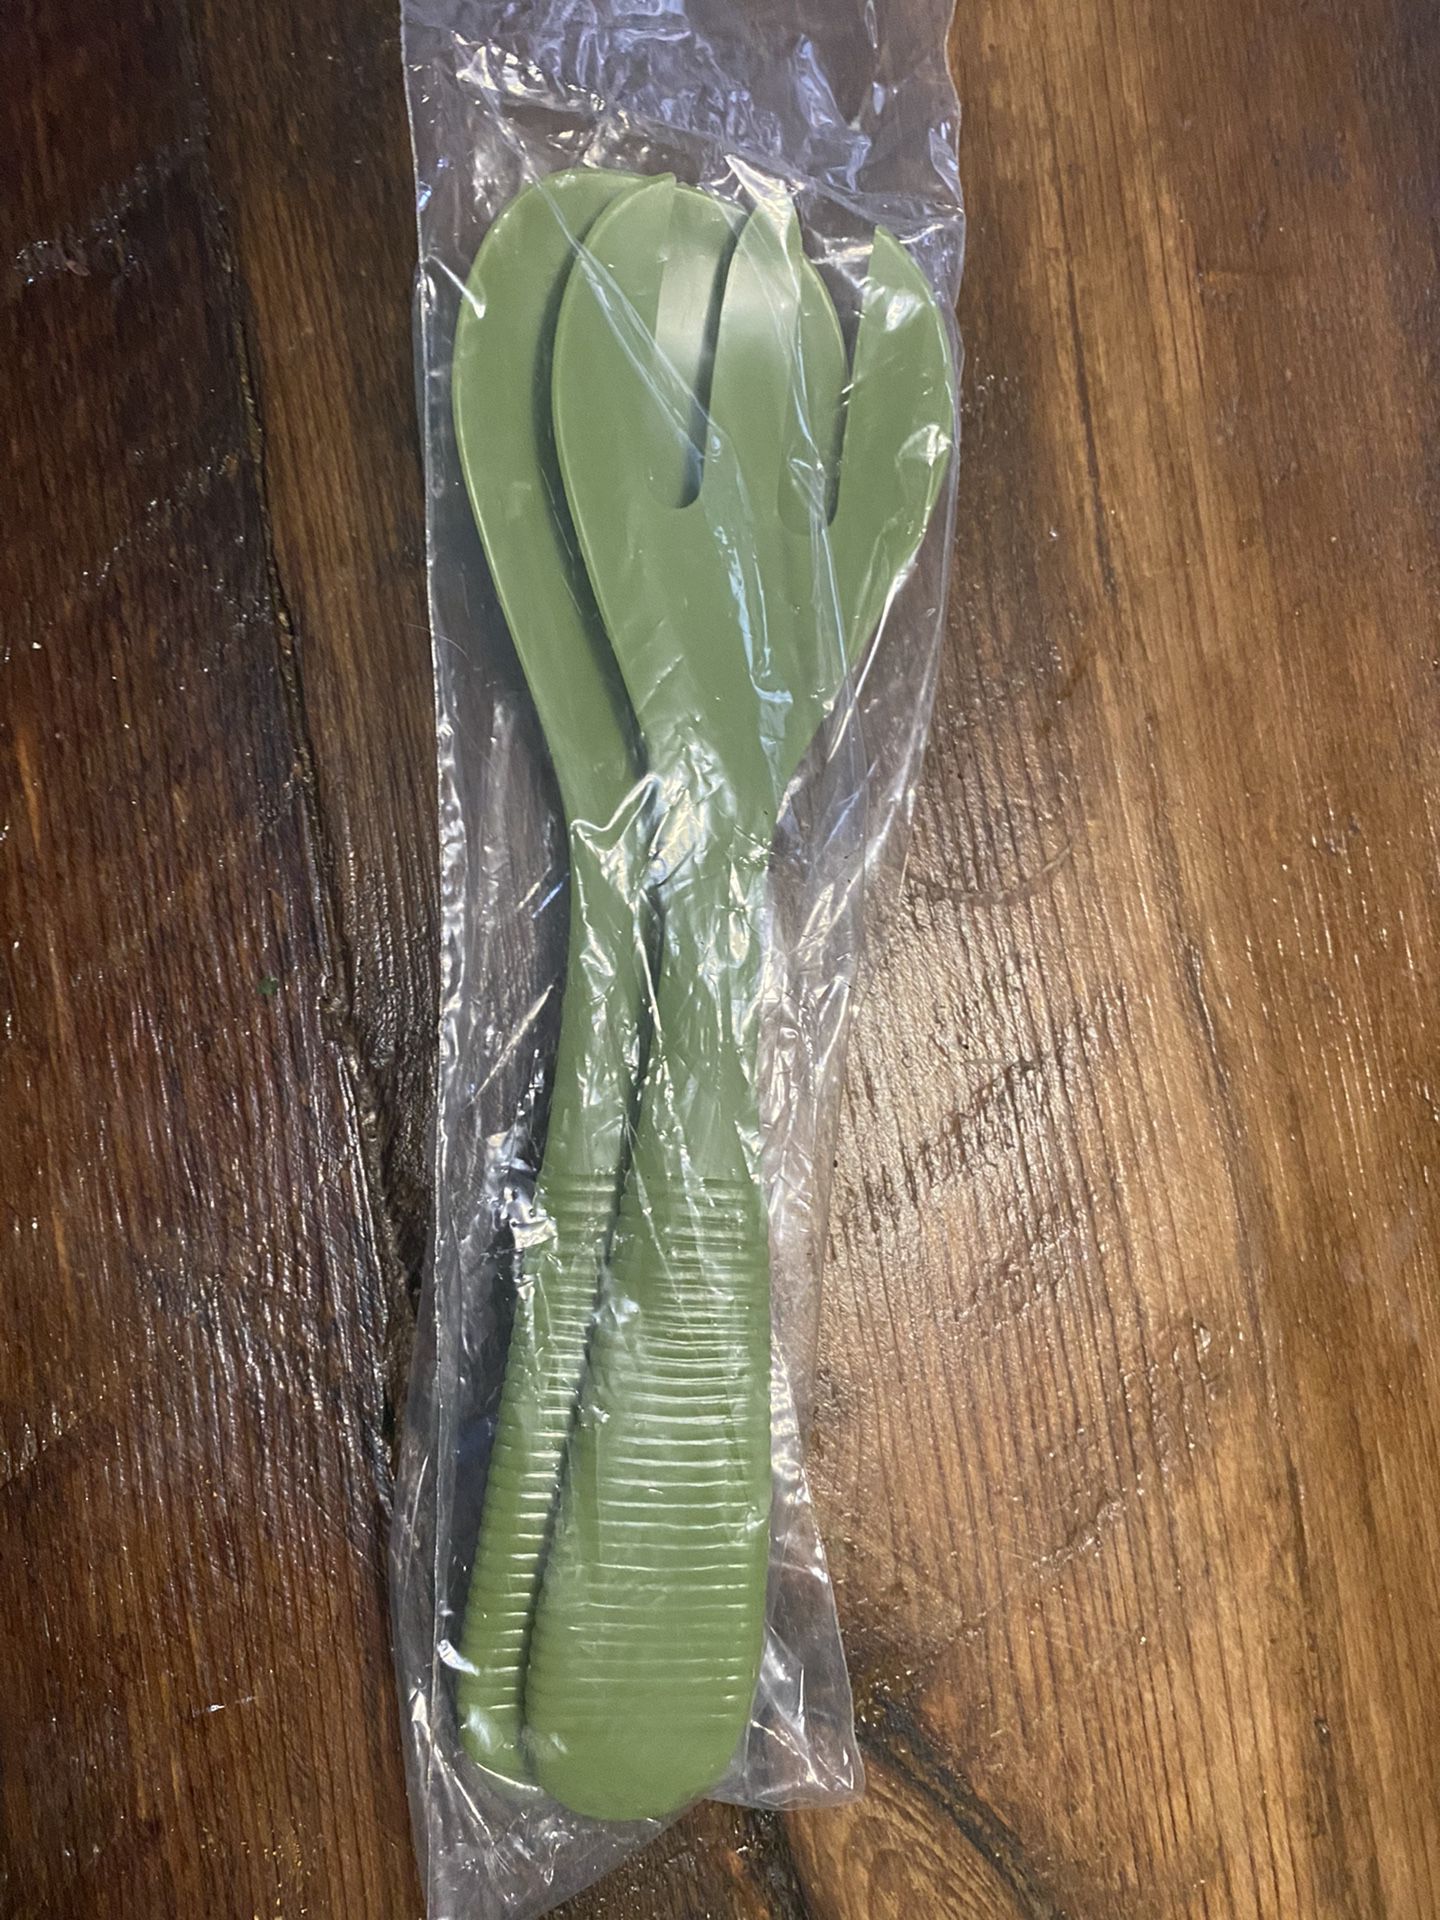 Vintage Melamine Raffiaware Serving Spoon Salad Spoon Utensils Green.  Still in original unopened package 20” long and 2 1/2” diameter  